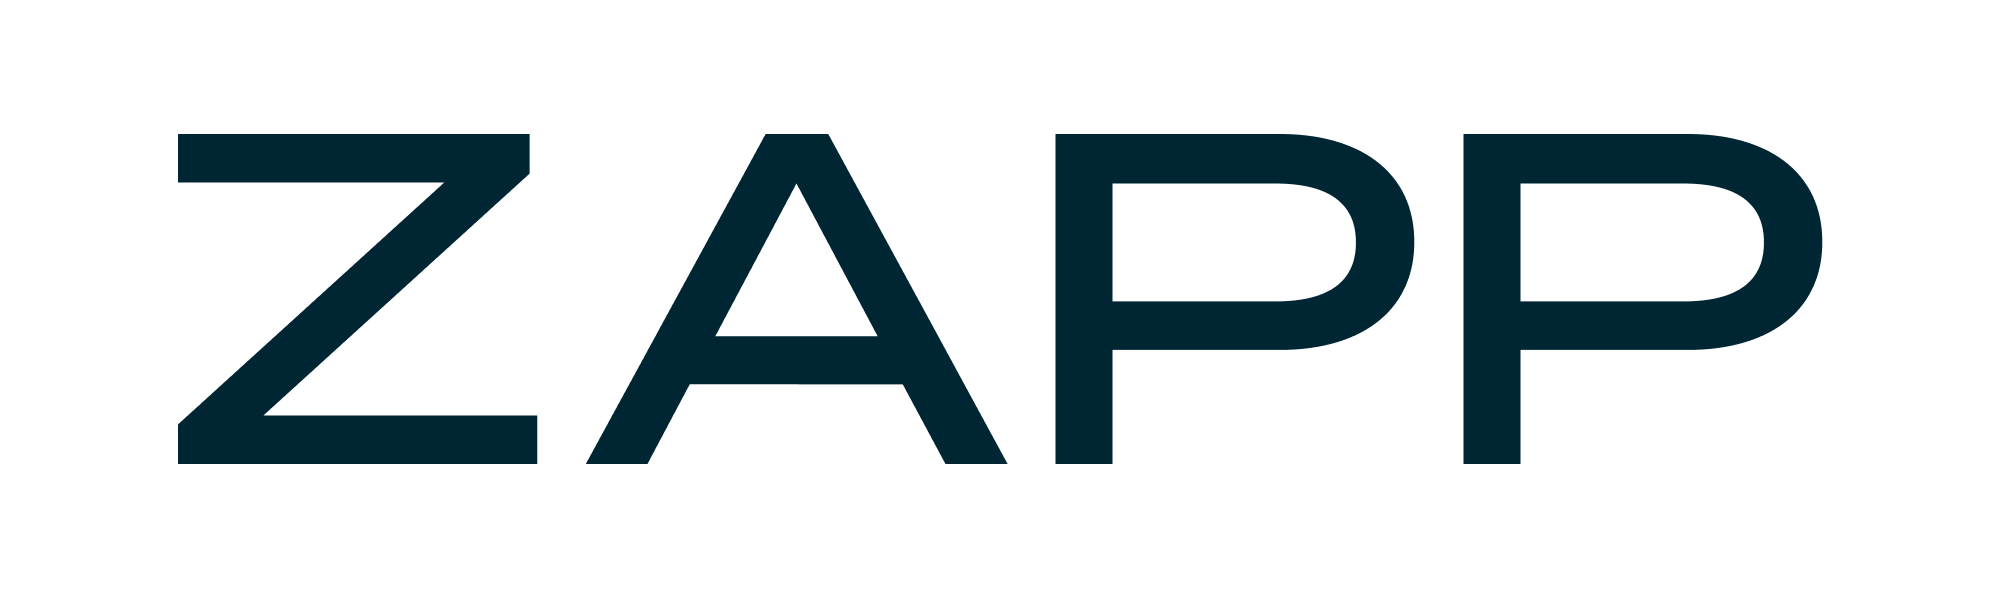 Zapp  logo